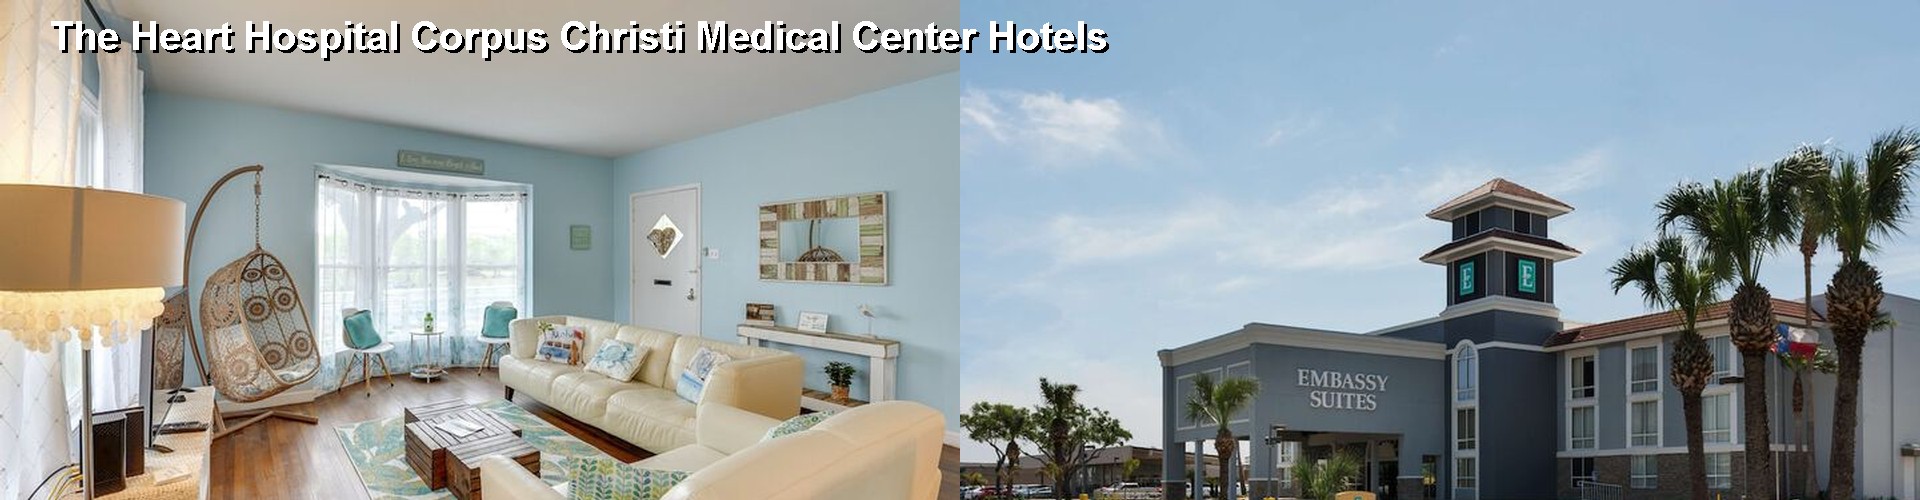 5 Best Hotels near The Heart Hospital Corpus Christi Medical Center